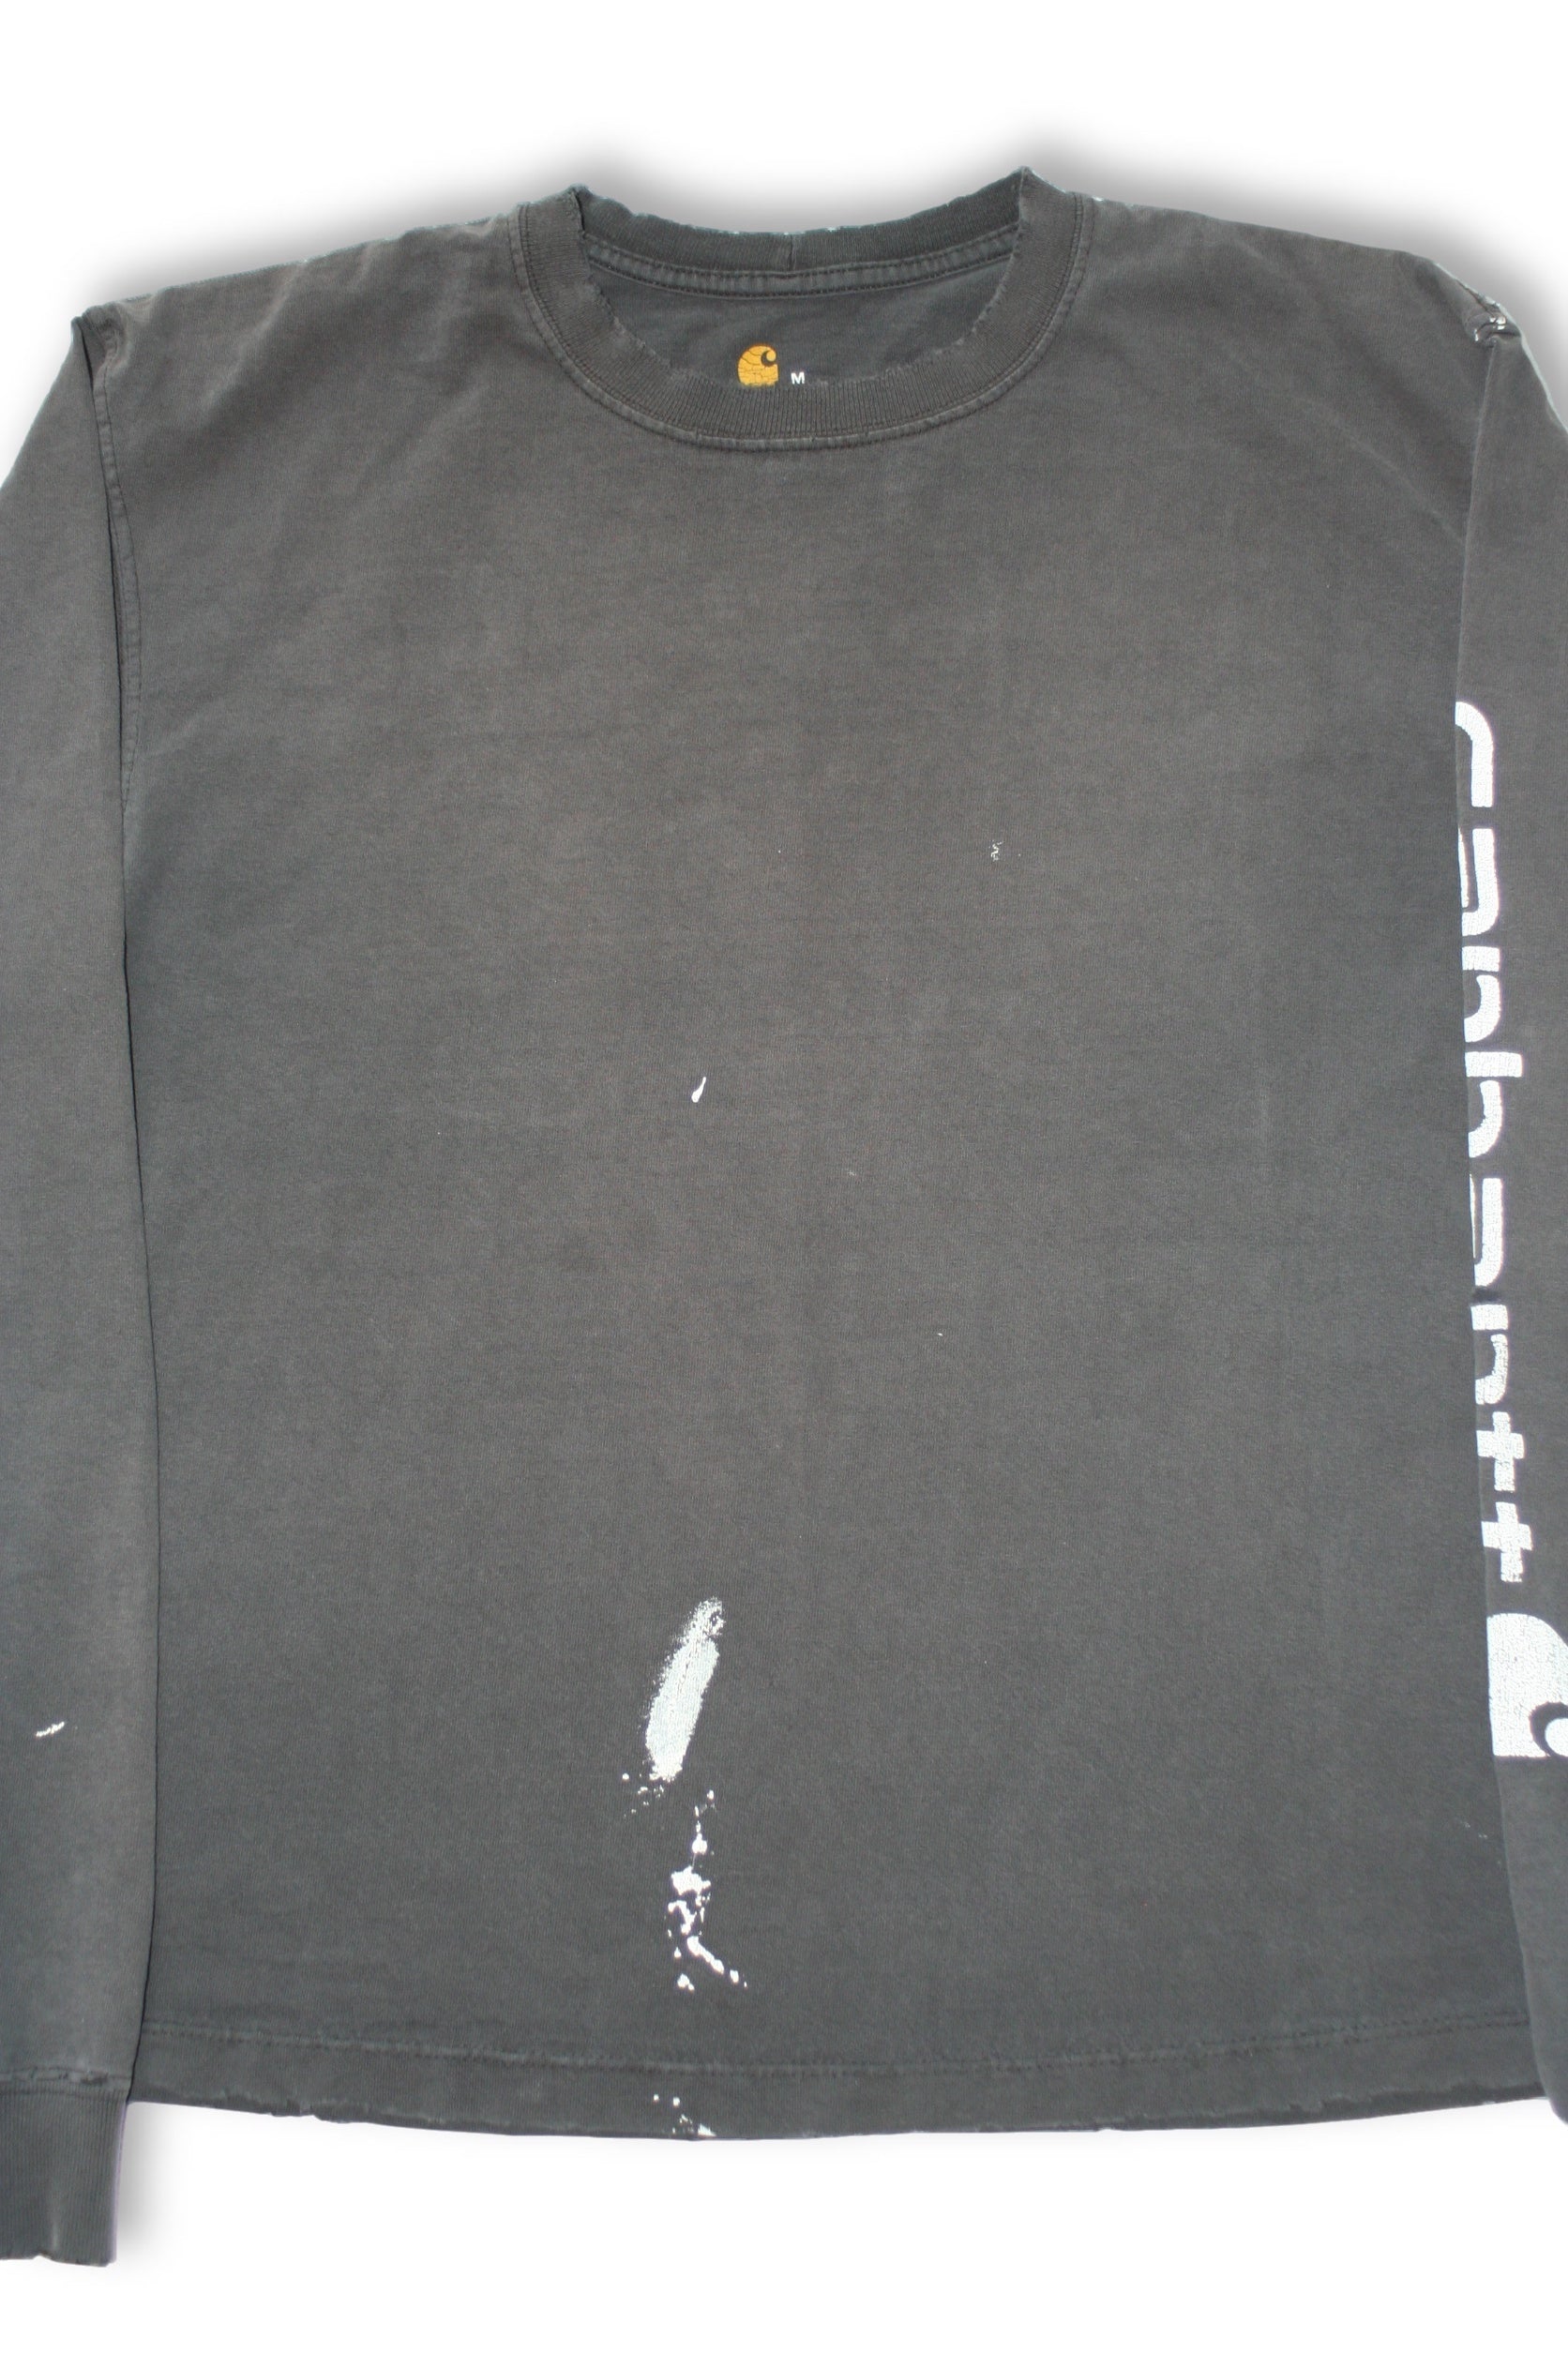 Vintage Thrashed & Faded Carhartt Long Sleeve T-Shirt - Medium